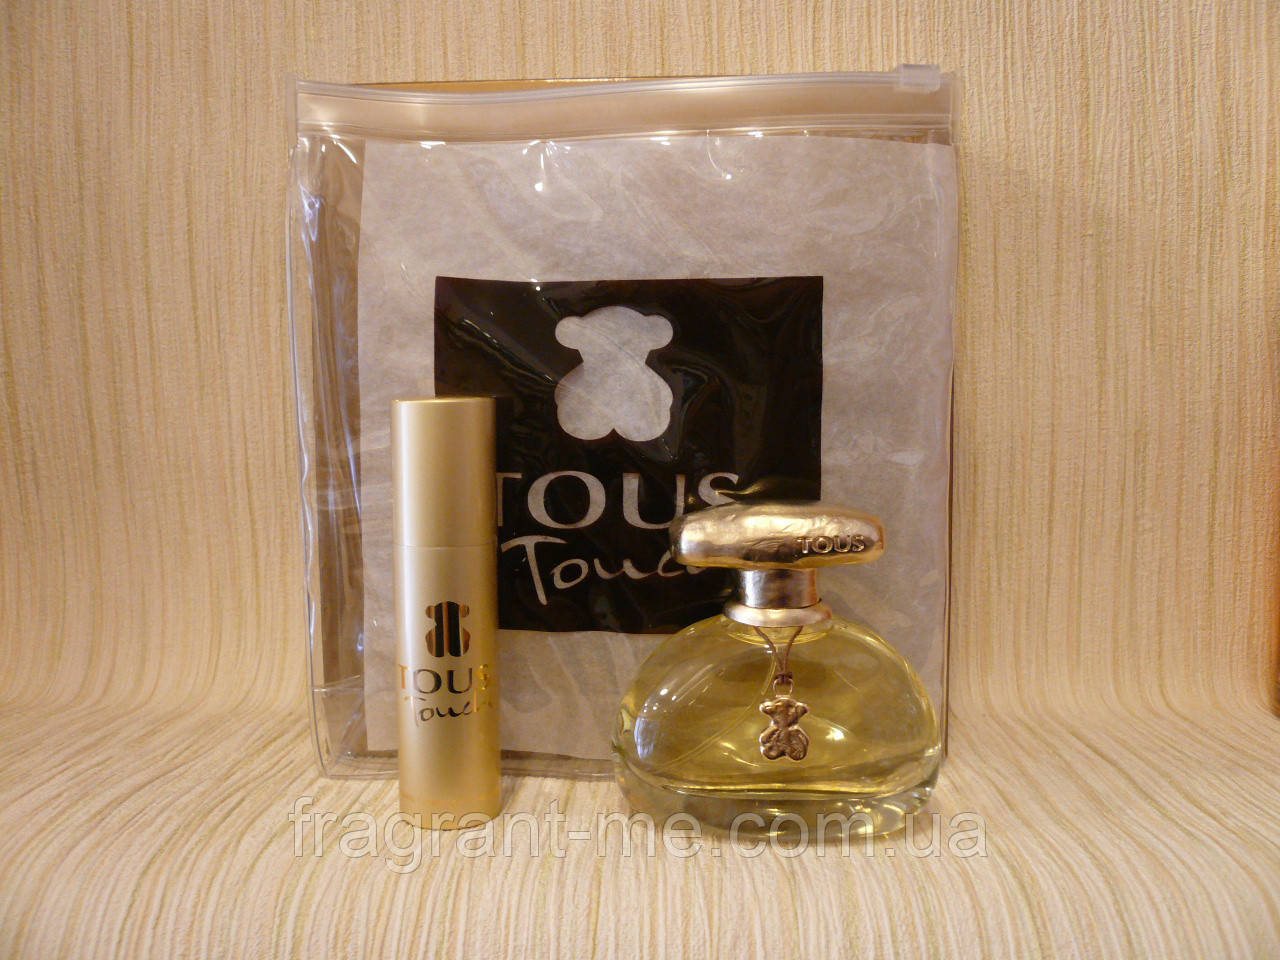 Tous — Tous Touch (2006) — Набір — Вінтаж, перший випуск 2006 року, стара формула аромату